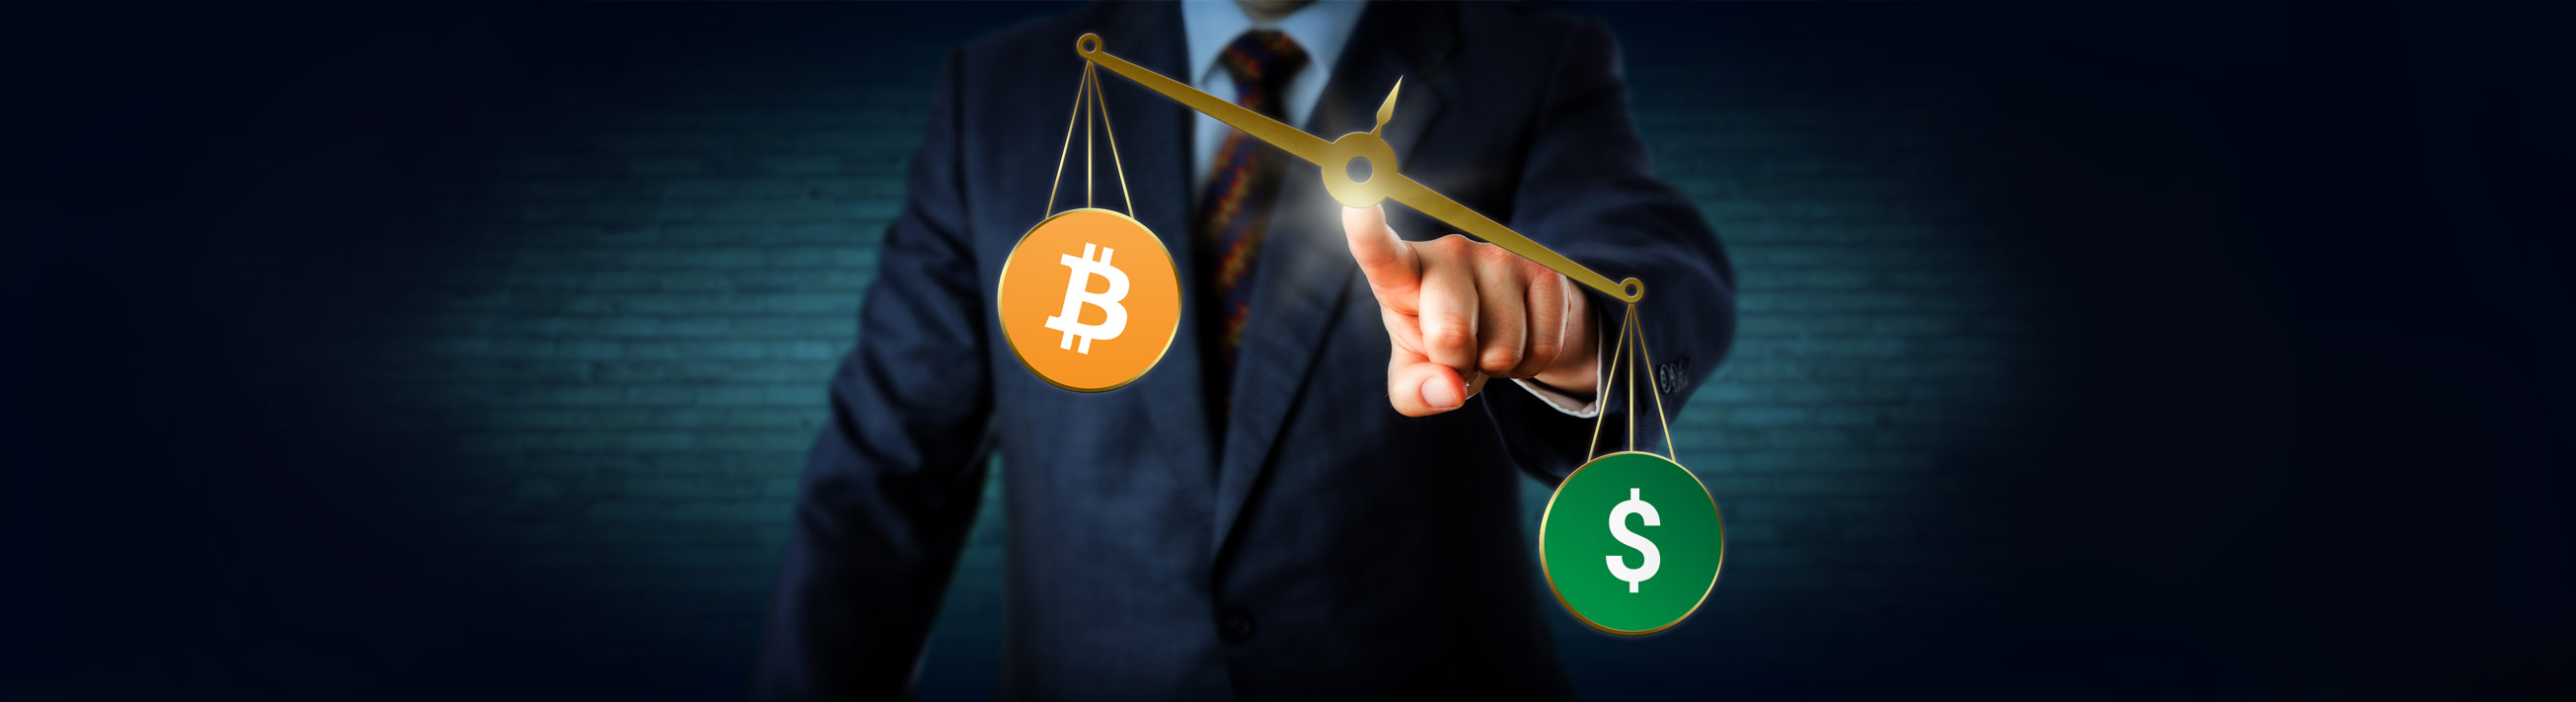 how to arbitrage bitcoin exchanges